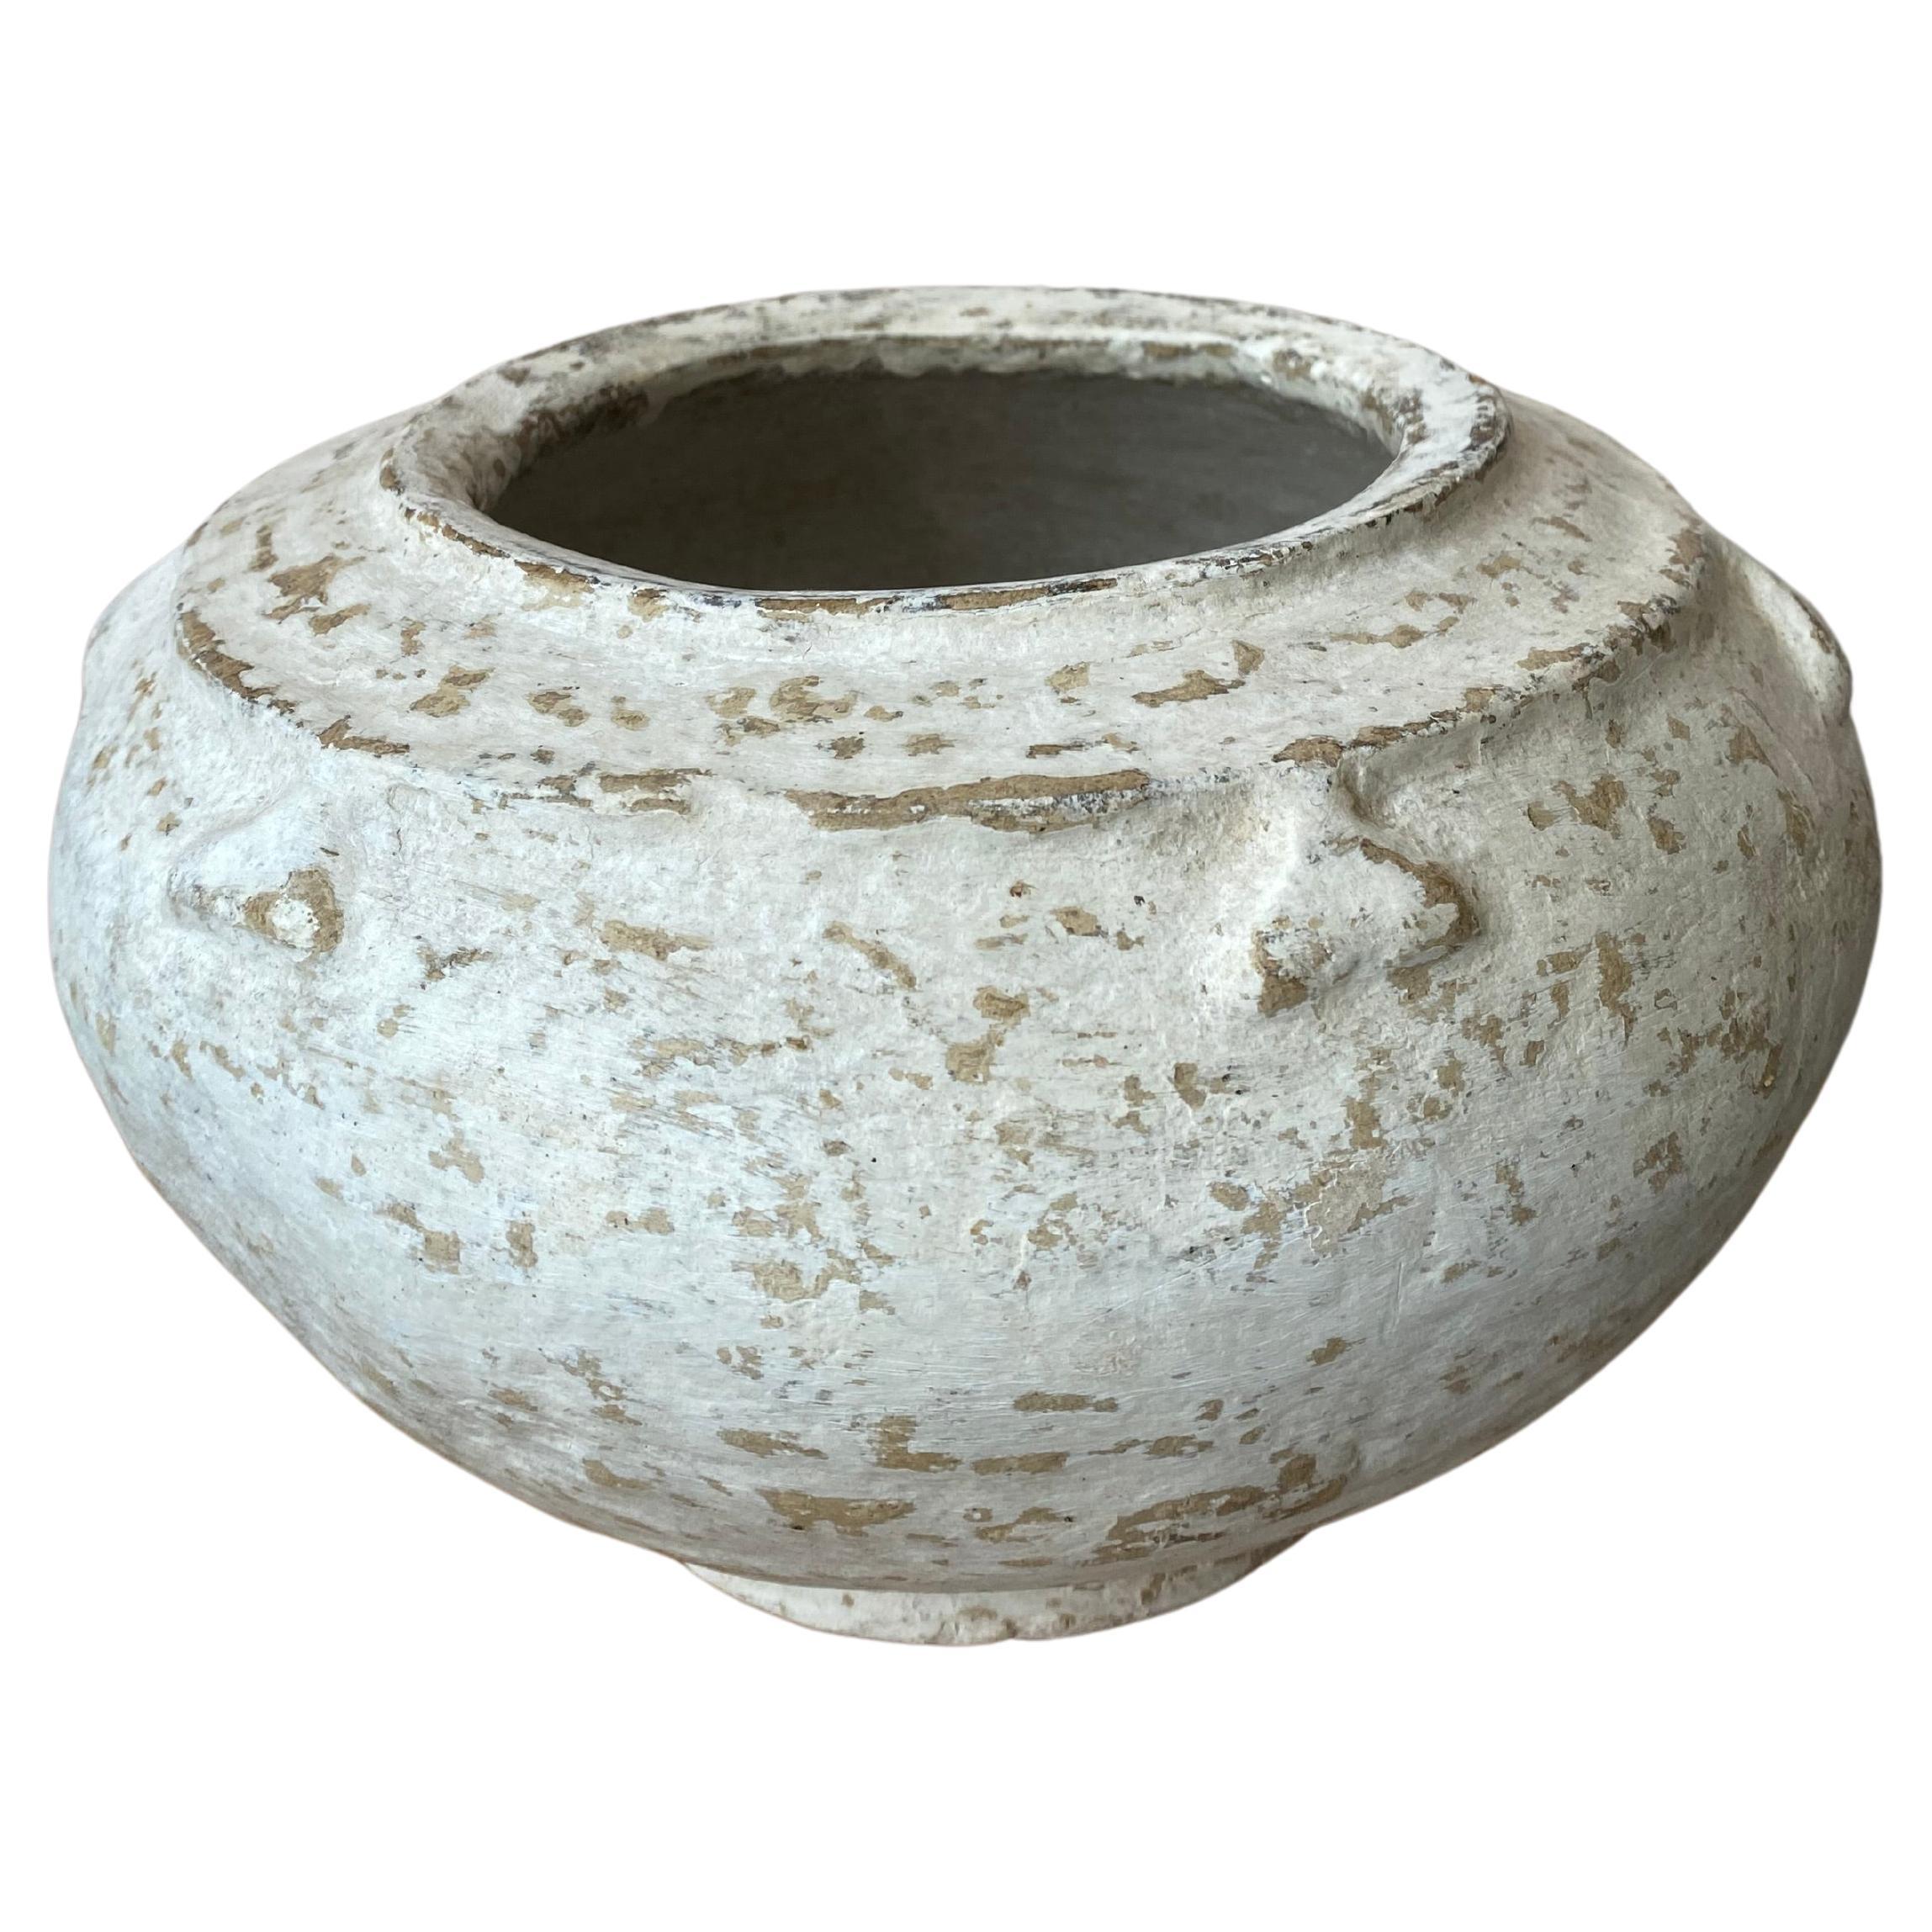 Vintage paper mached bowl